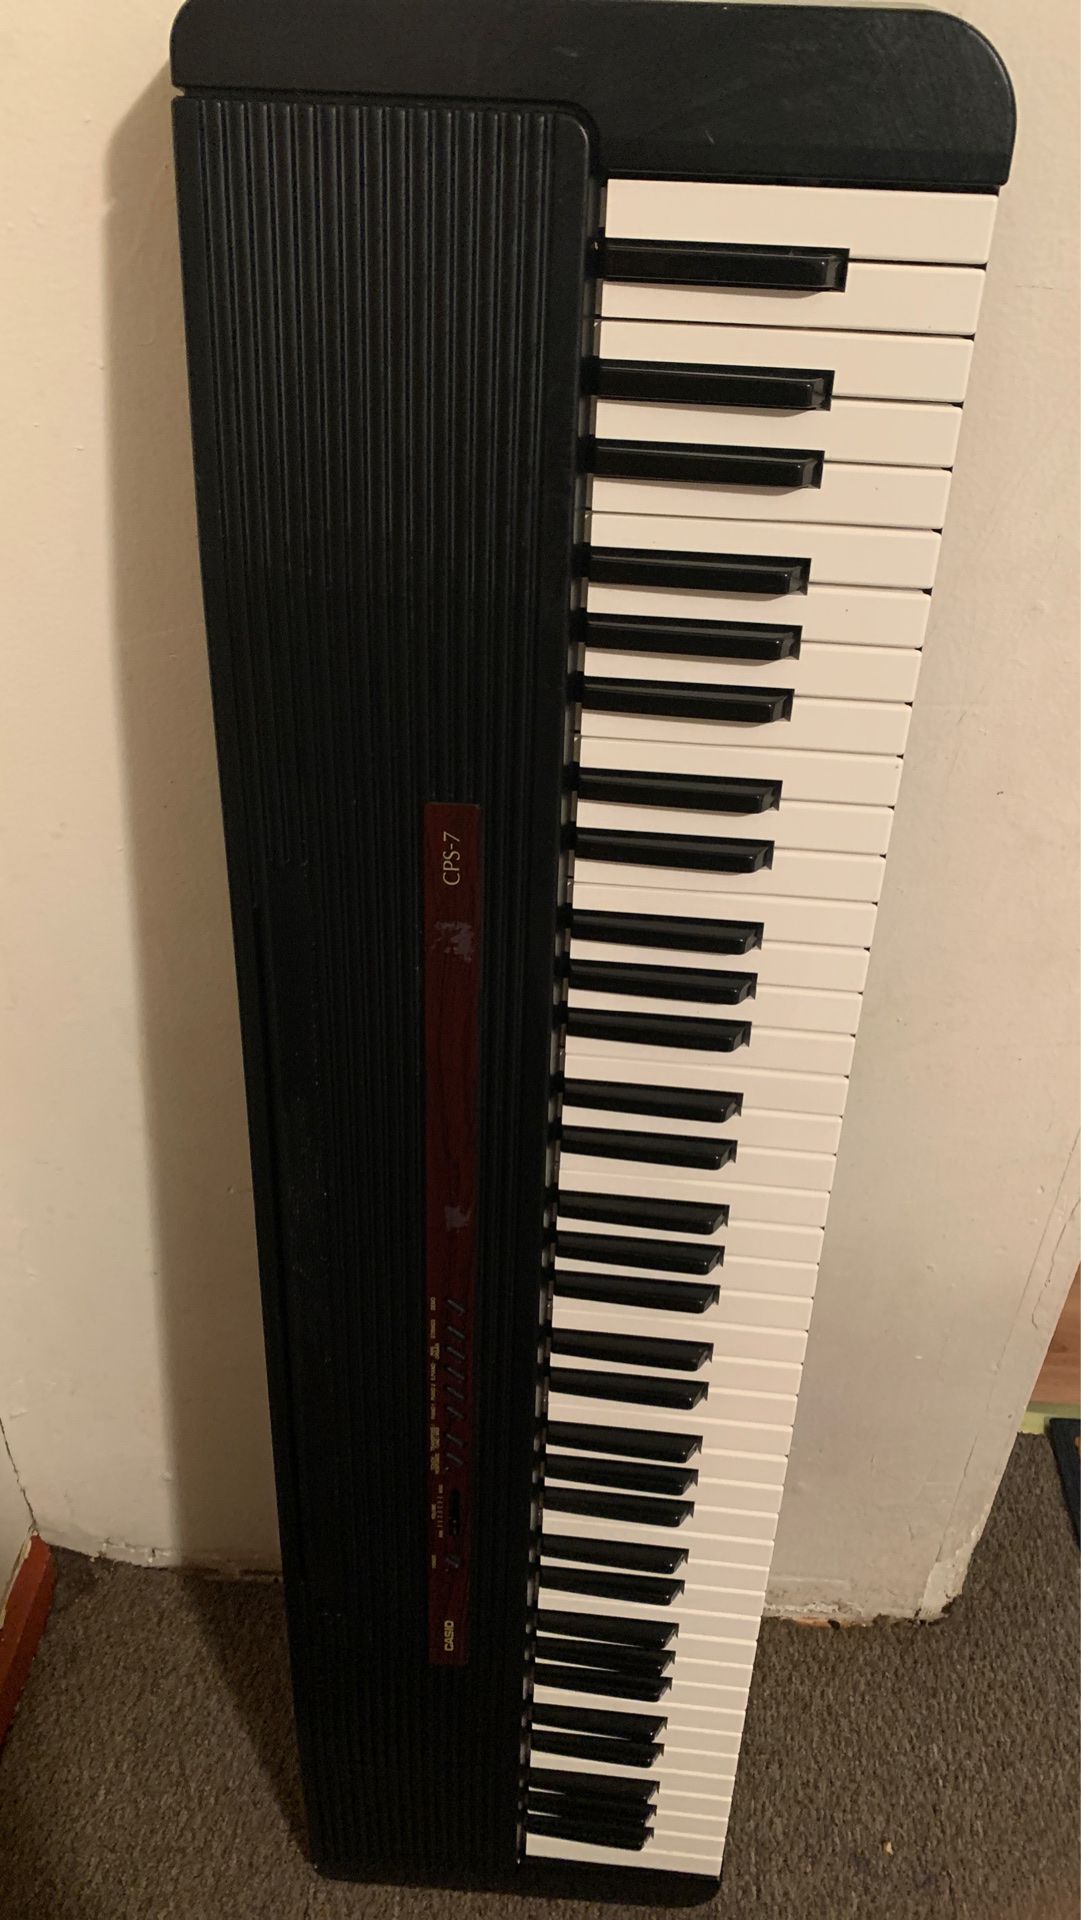 Casio musical keyboard